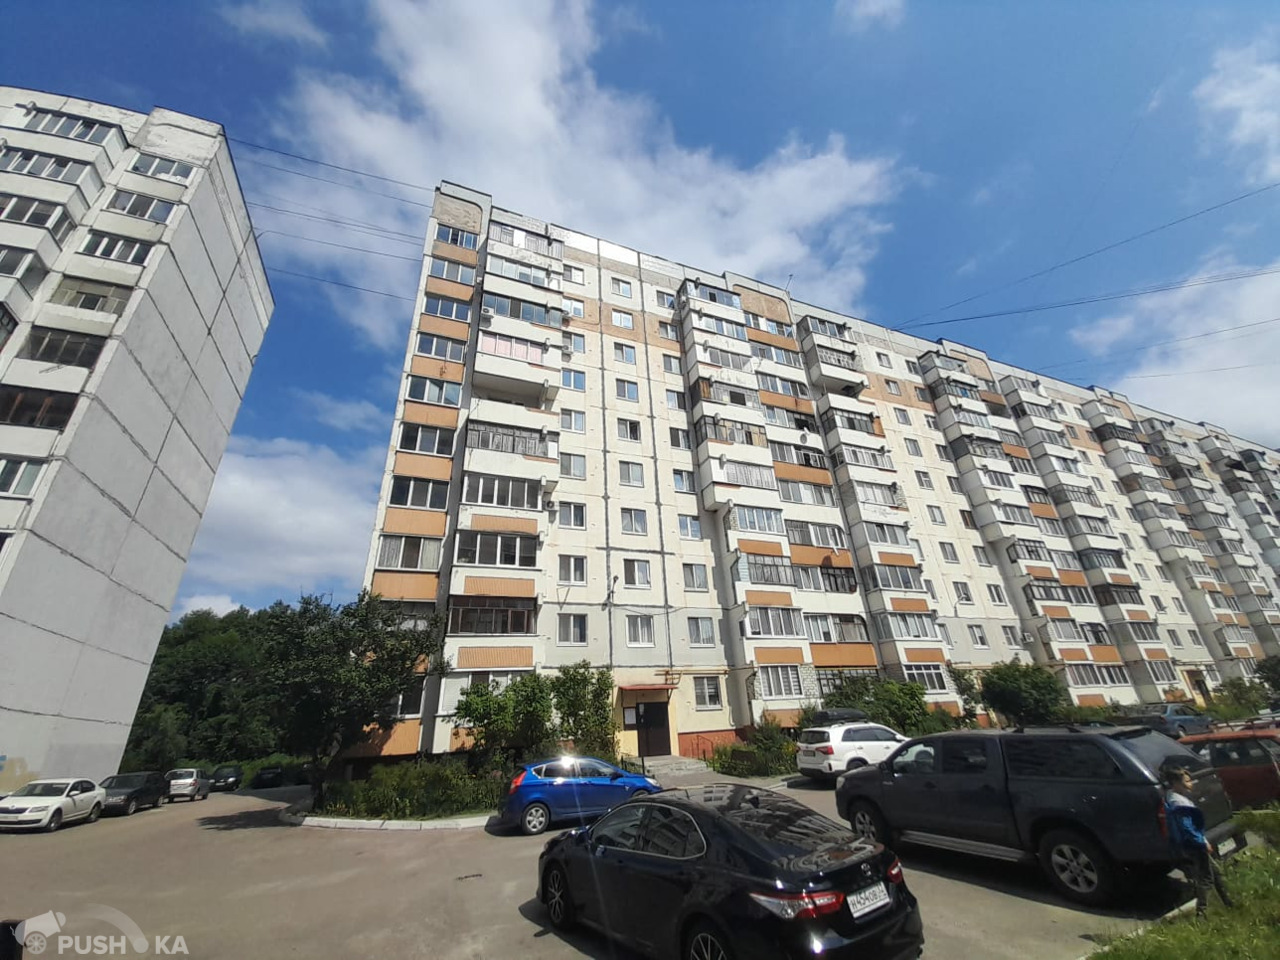 Продаётся 1-комнатная квартира 37.4 кв.м. этаж 3/10 за 1 990 000 руб 